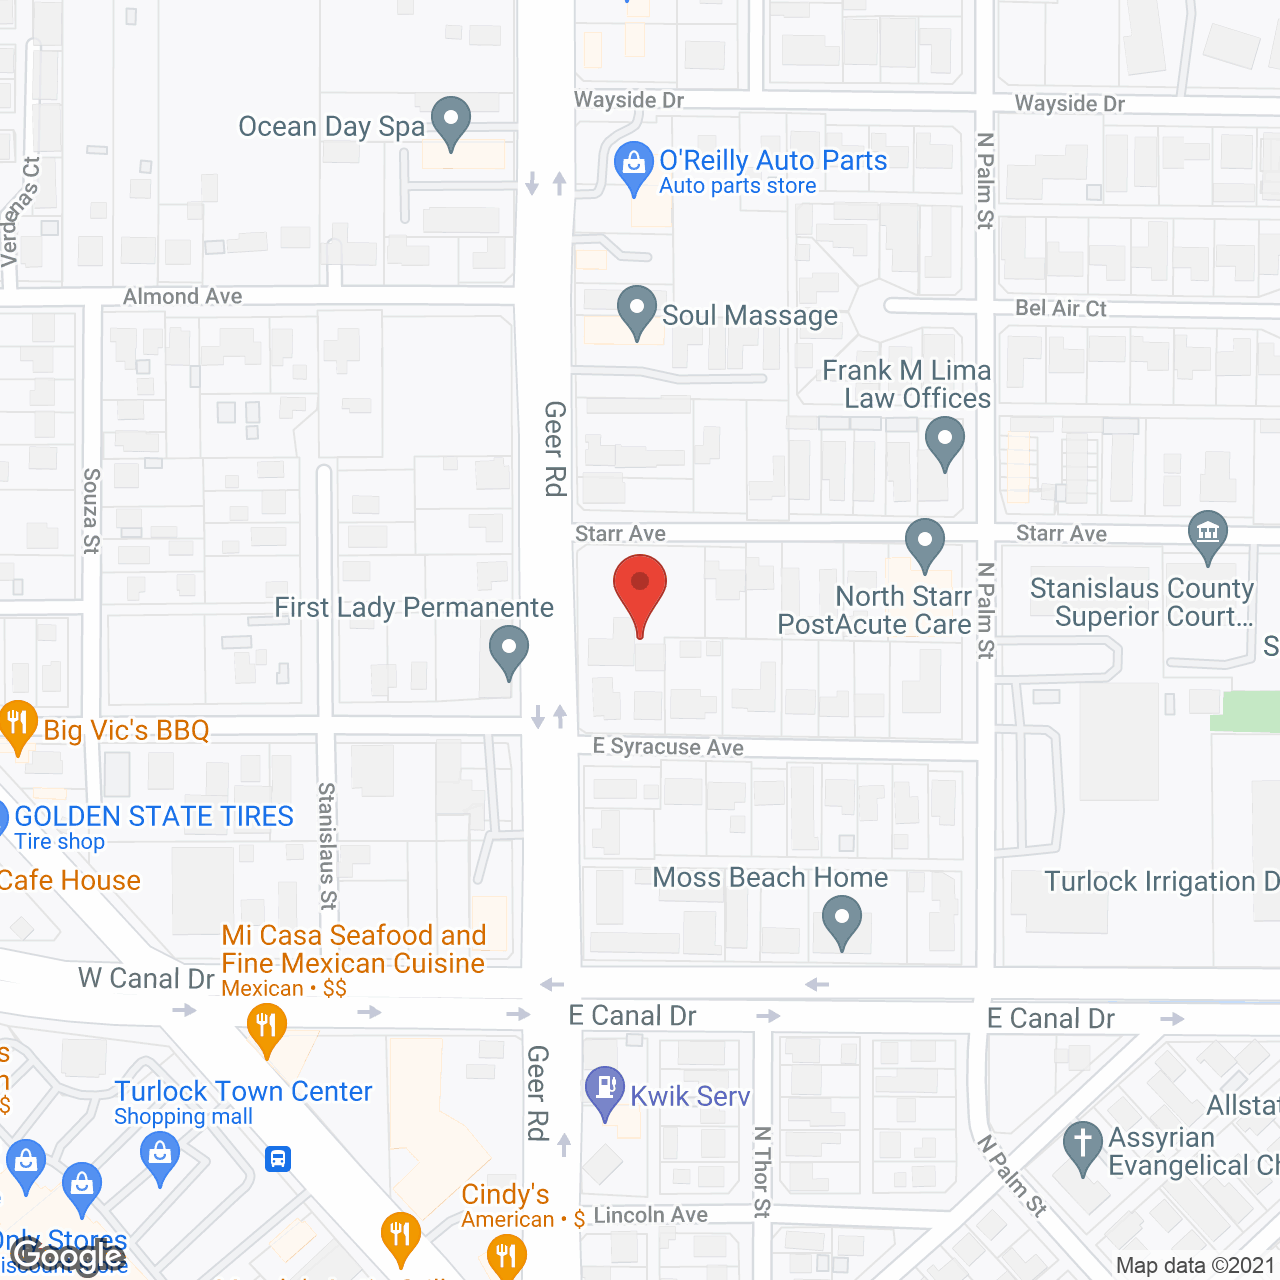 Lifespring Senior Campus in google map